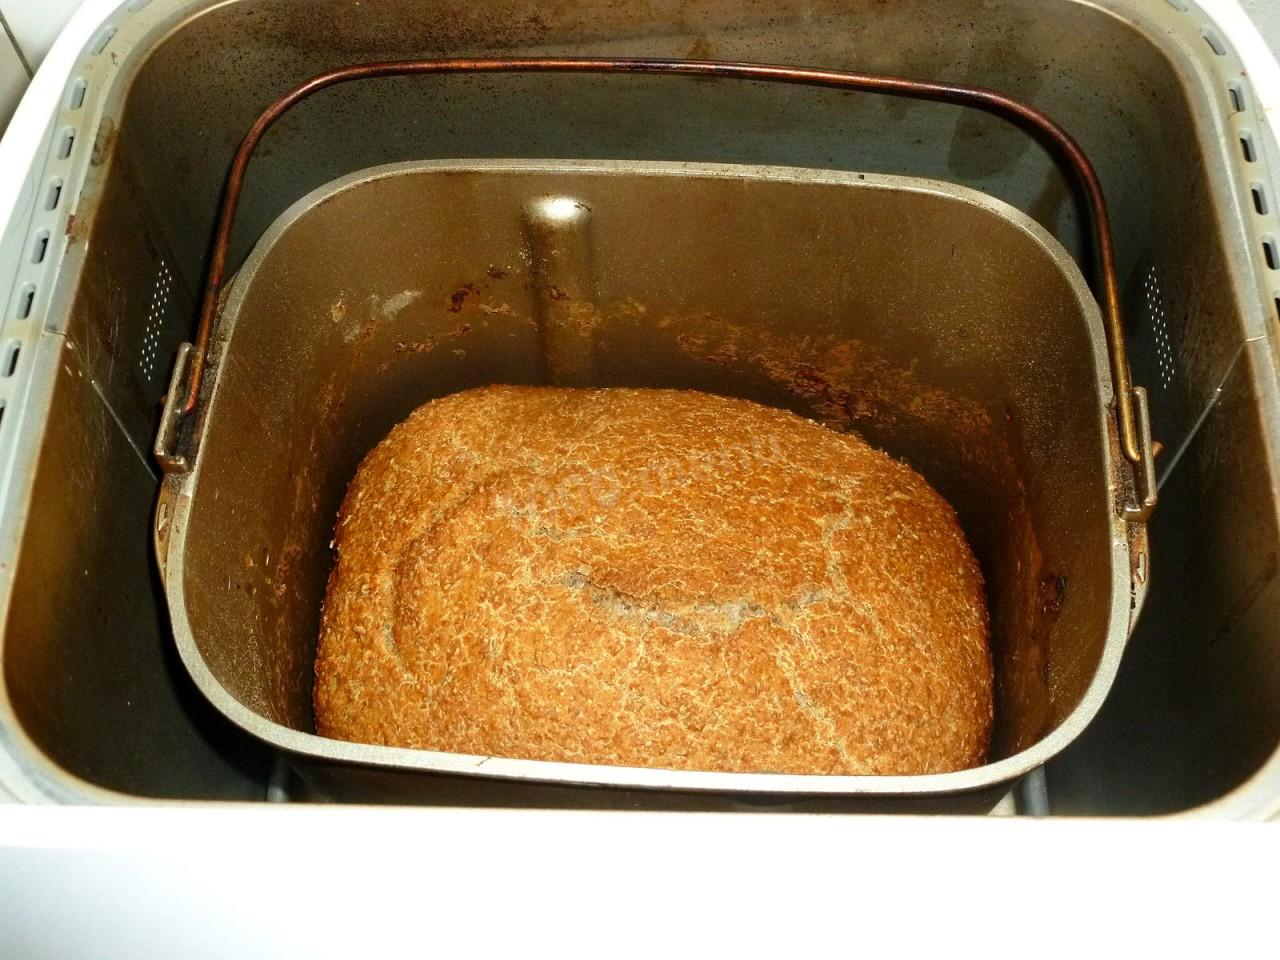 Хлебопечка делать тесто. Фадж ирландский хлеб. Выпекание хлеба в хлебопечке. Хлебопечка внутри. Домашний хлеб в хлебопечке.